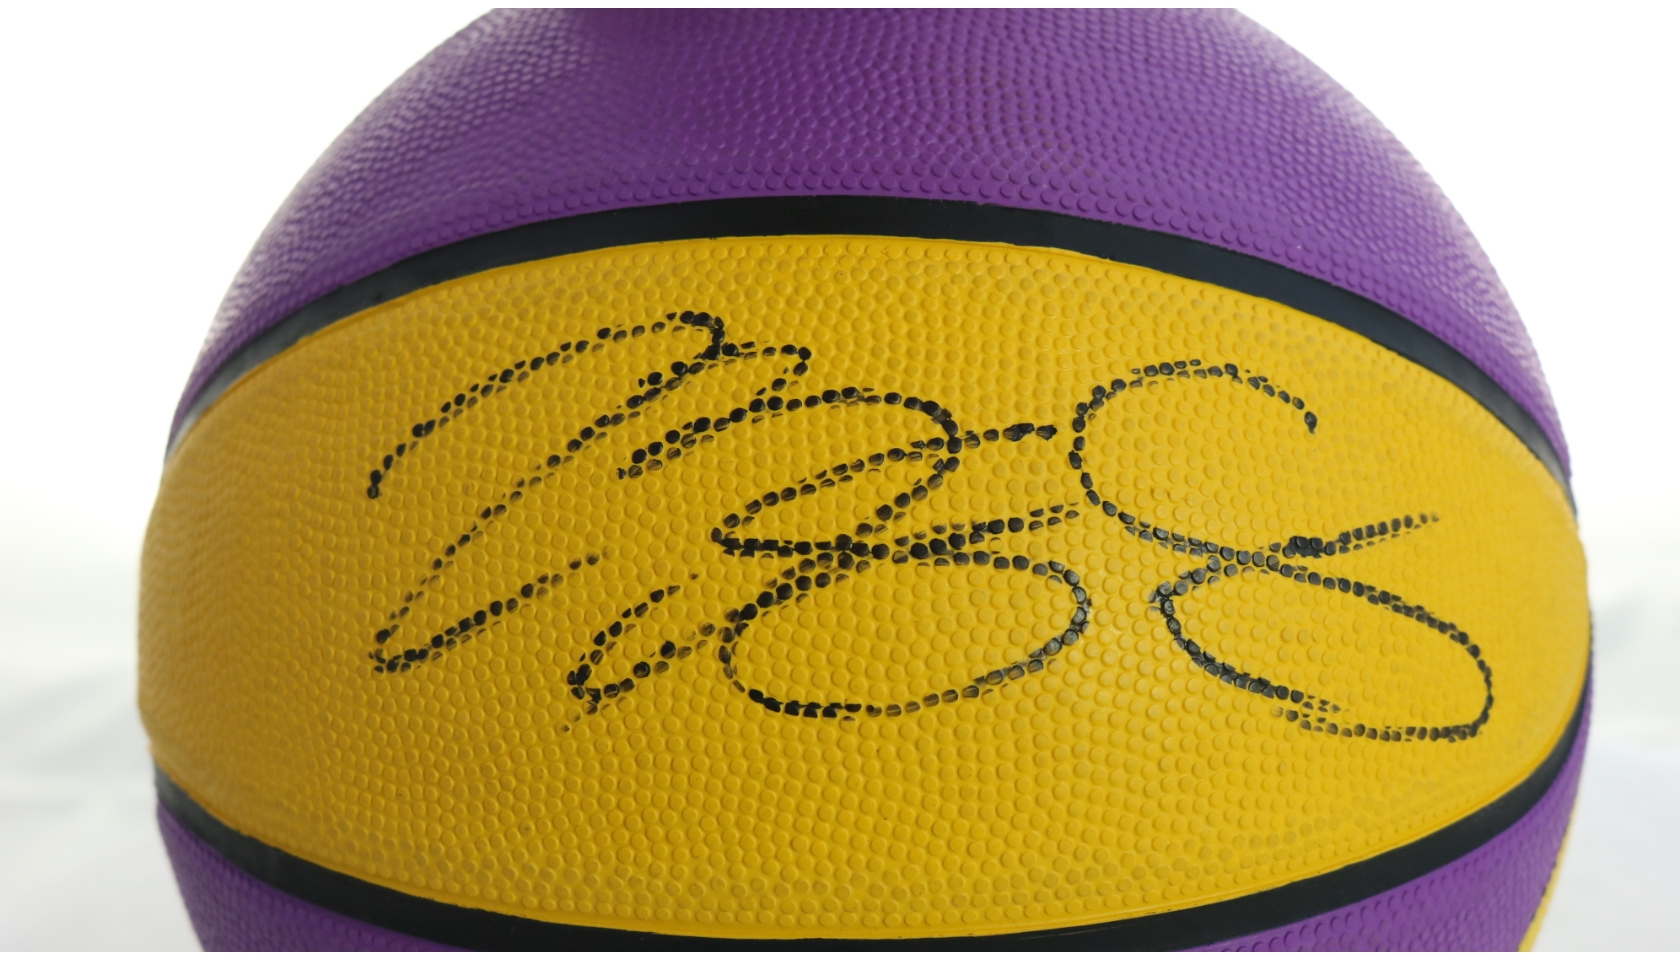 Lebron James Signed Game Used Spalding NBA Basketball - CharityStars